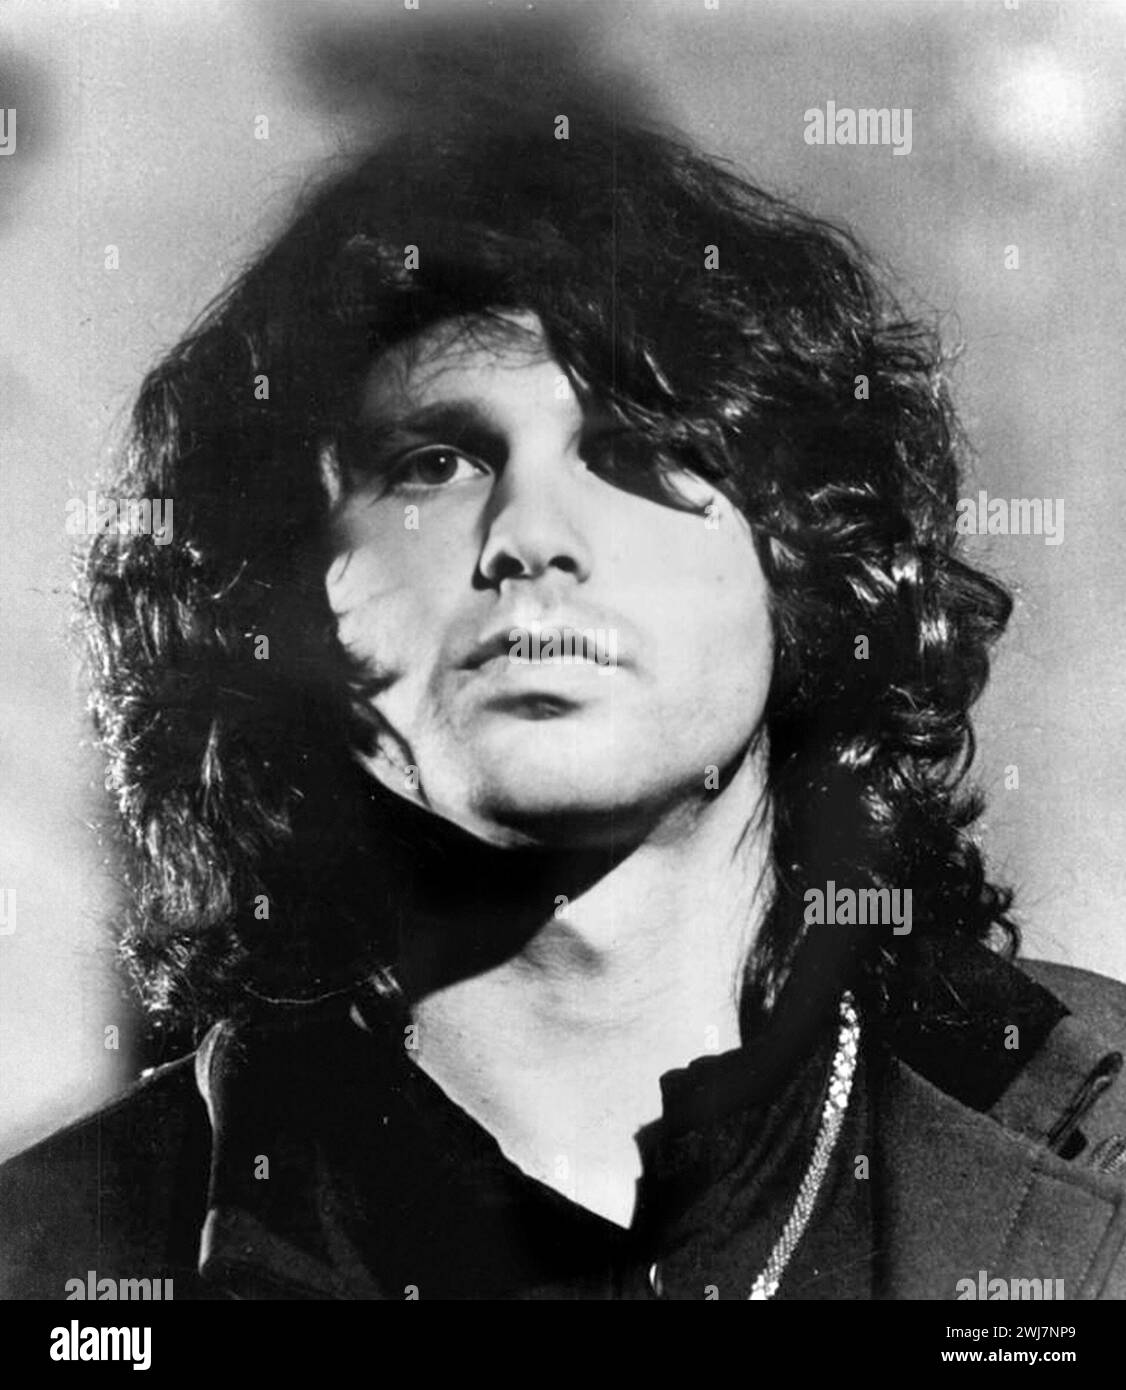 Jim Morrison. Portrait of the American singer and songwriter, James Douglas Morrison (1943-1971), publicity photo, 1968. Morrison was lead singer of The Doors. Stock Photo